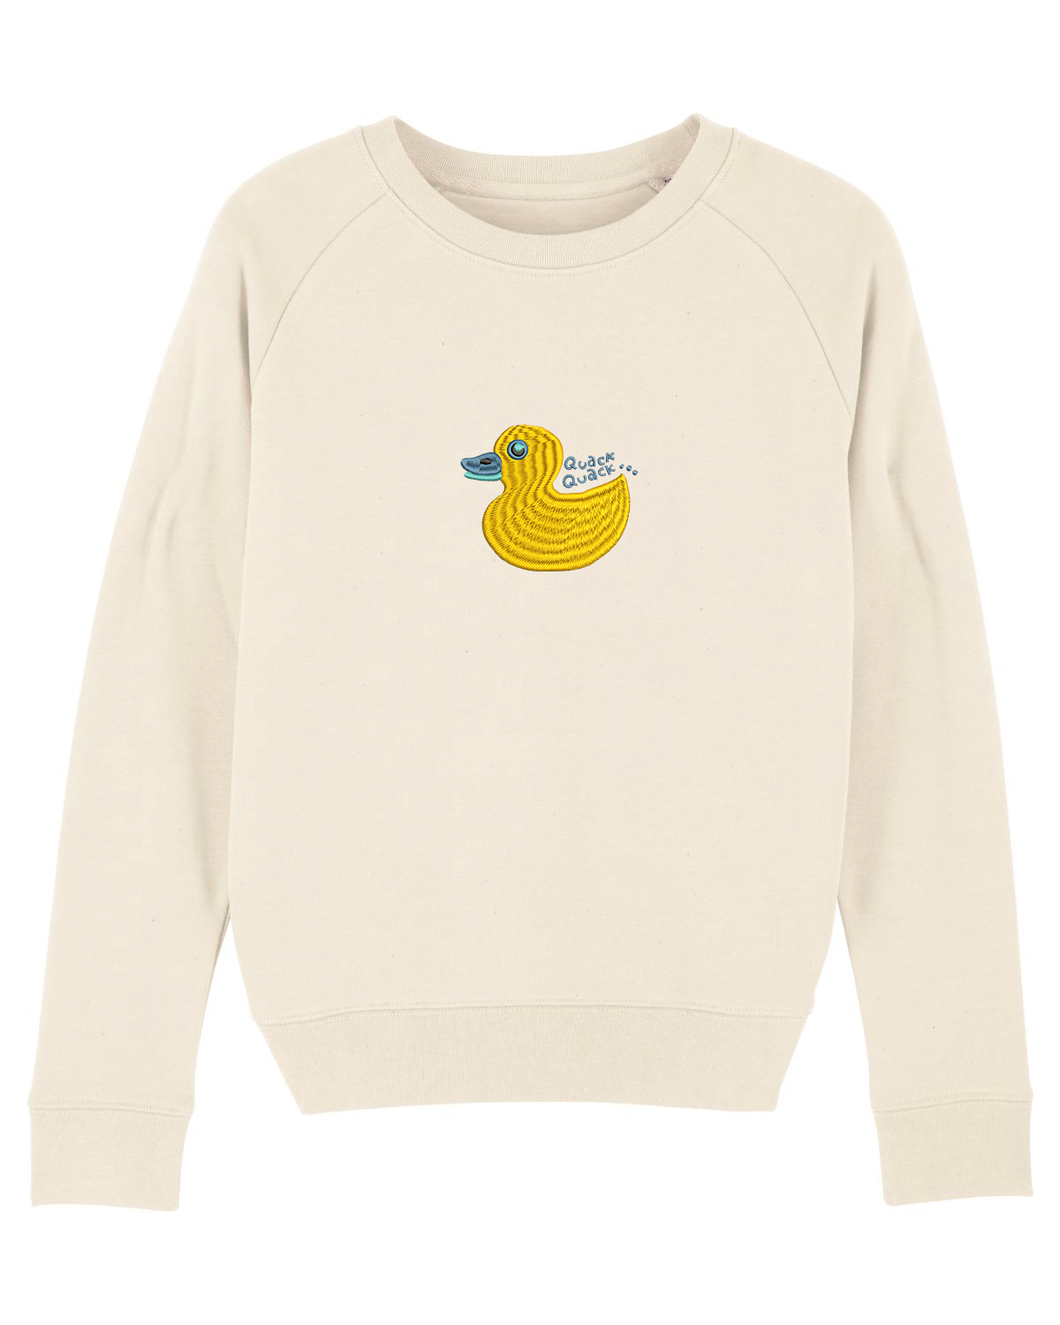 Quack, Quack 🦆- Embroidered women's sweatshirt